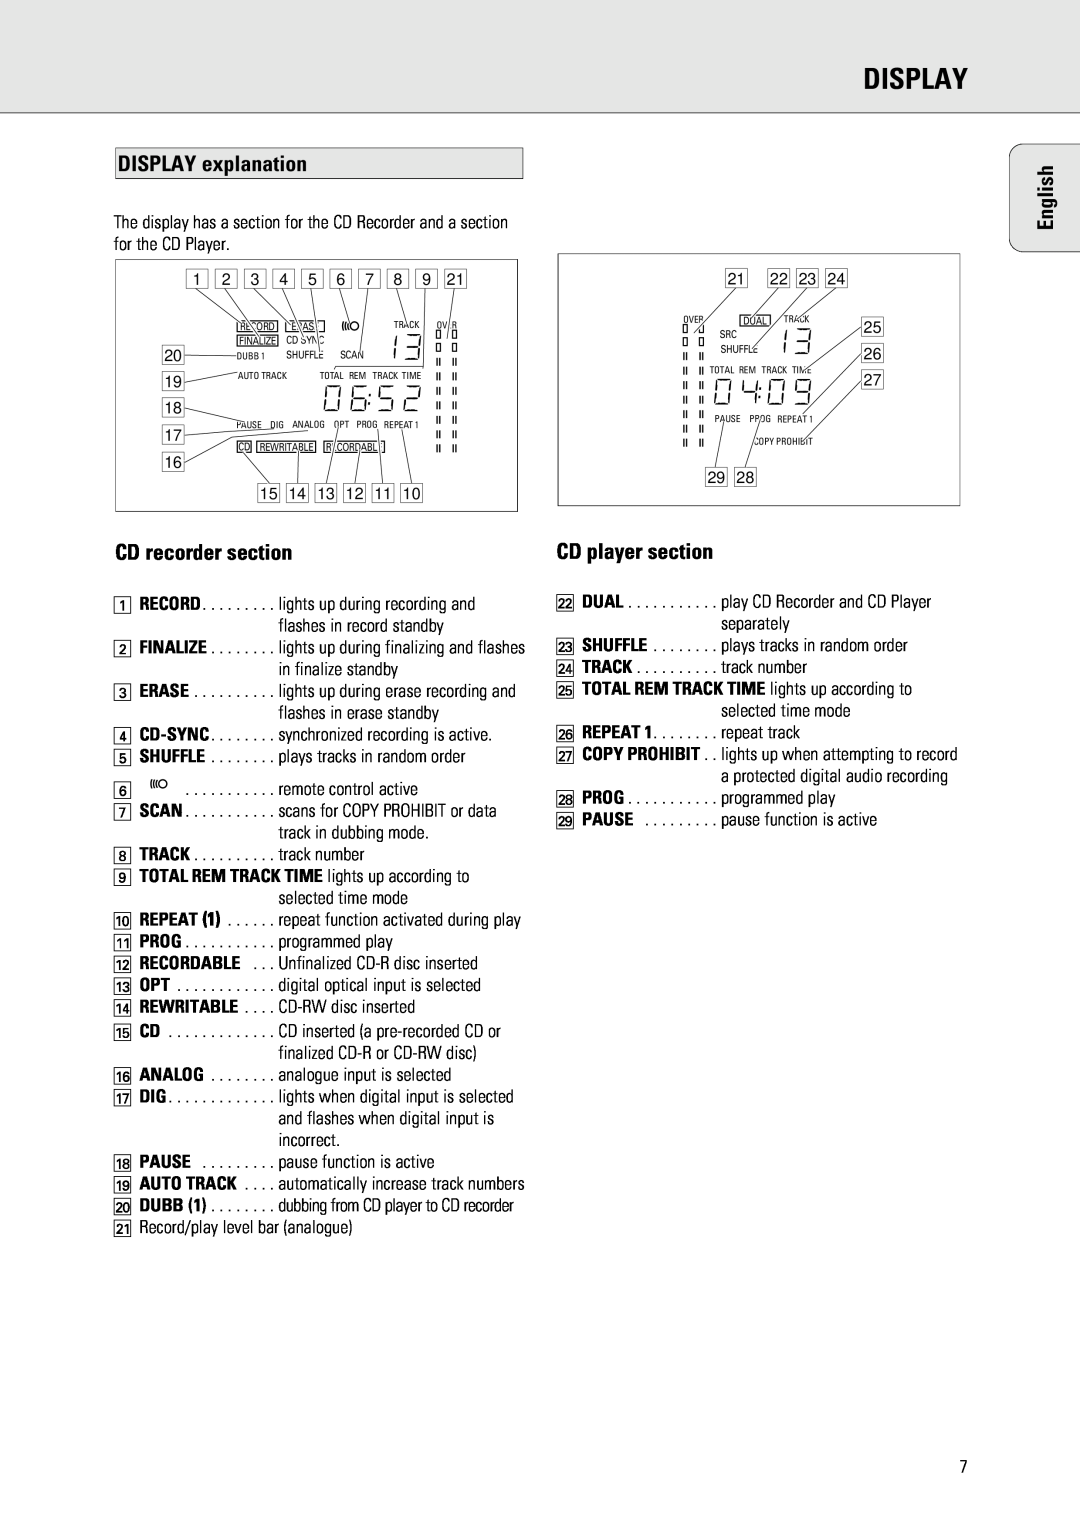 Philips 765 manual Display, DISPLAY explanation, CD recorder section, CD player section, Analog, English 